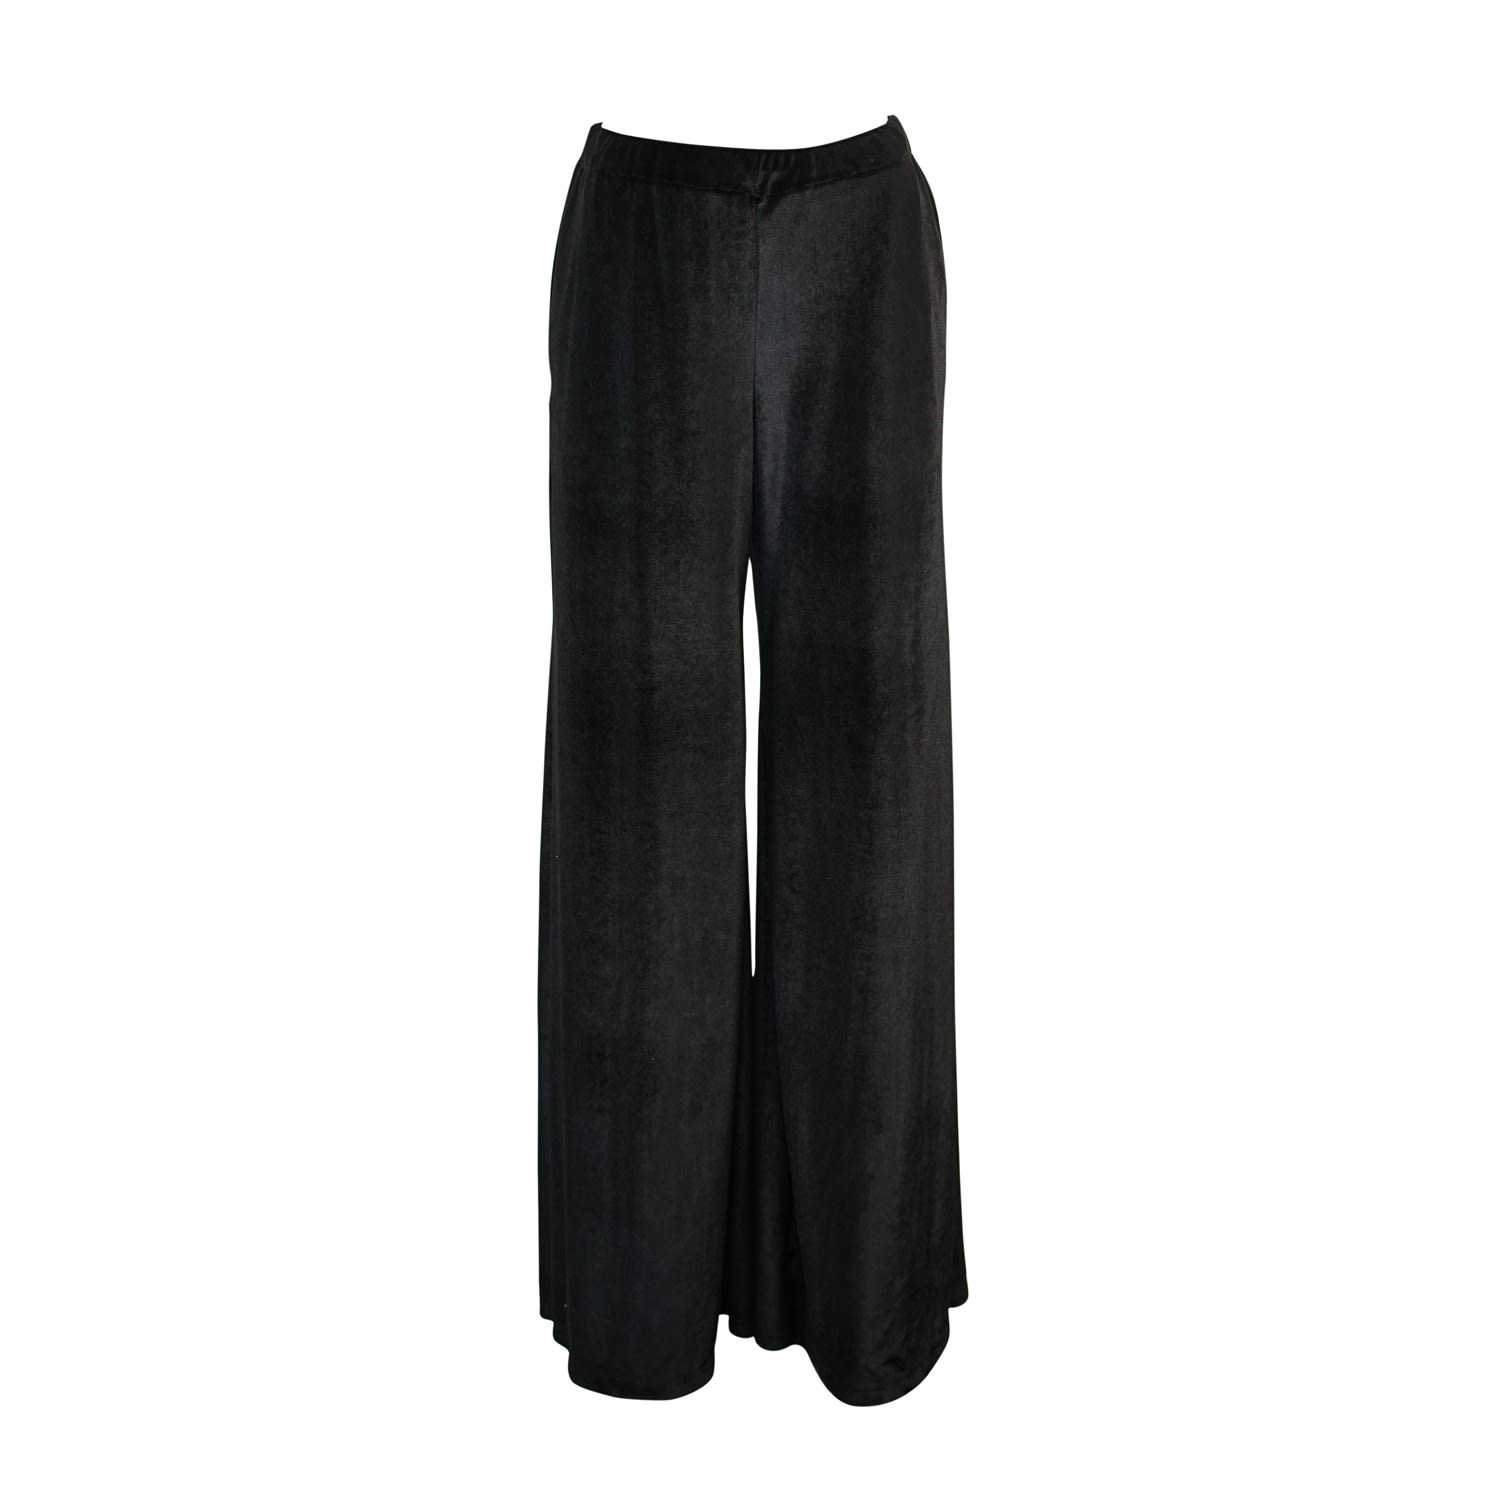 Jennafer Grace Women's Black Velvet Palazzo Pants